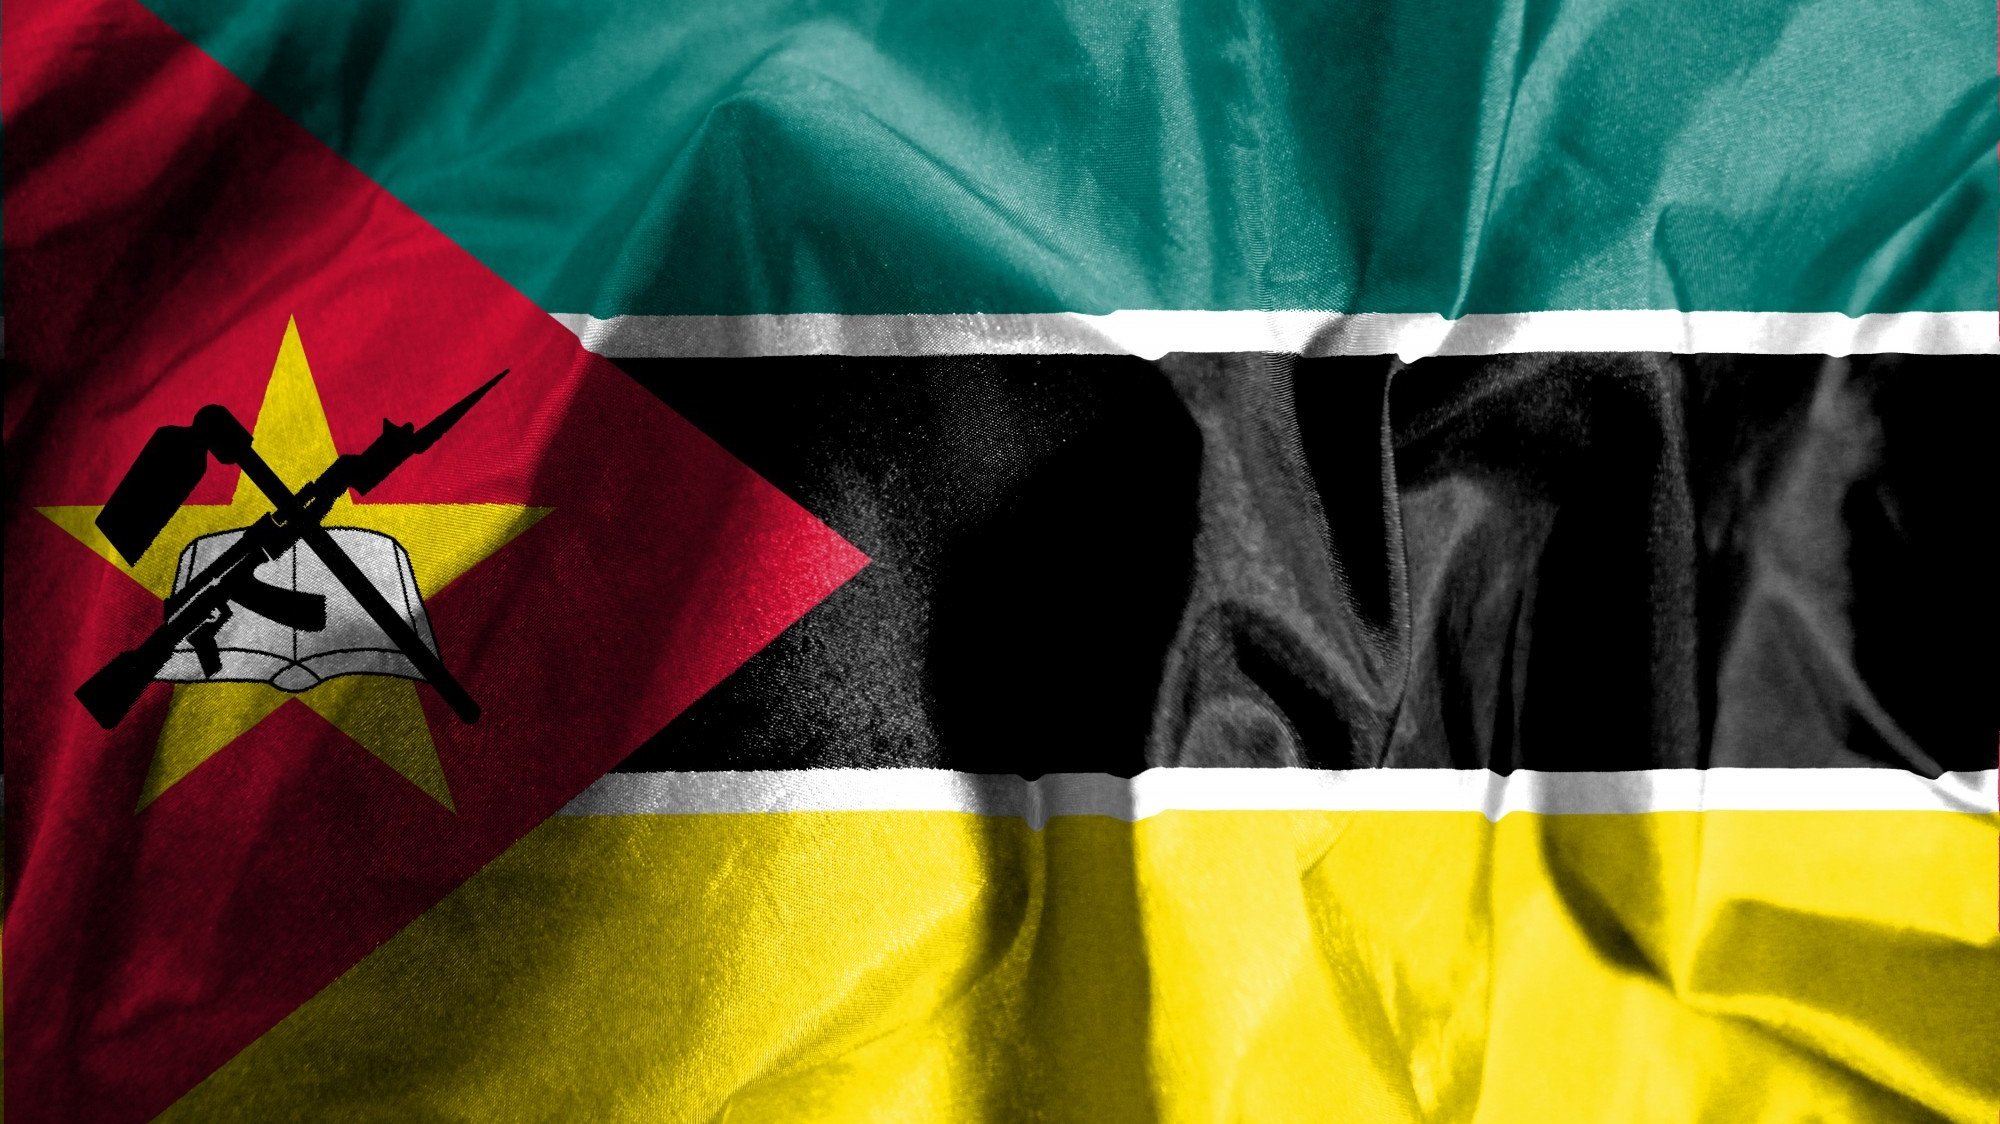 Bandeira de Moçambique